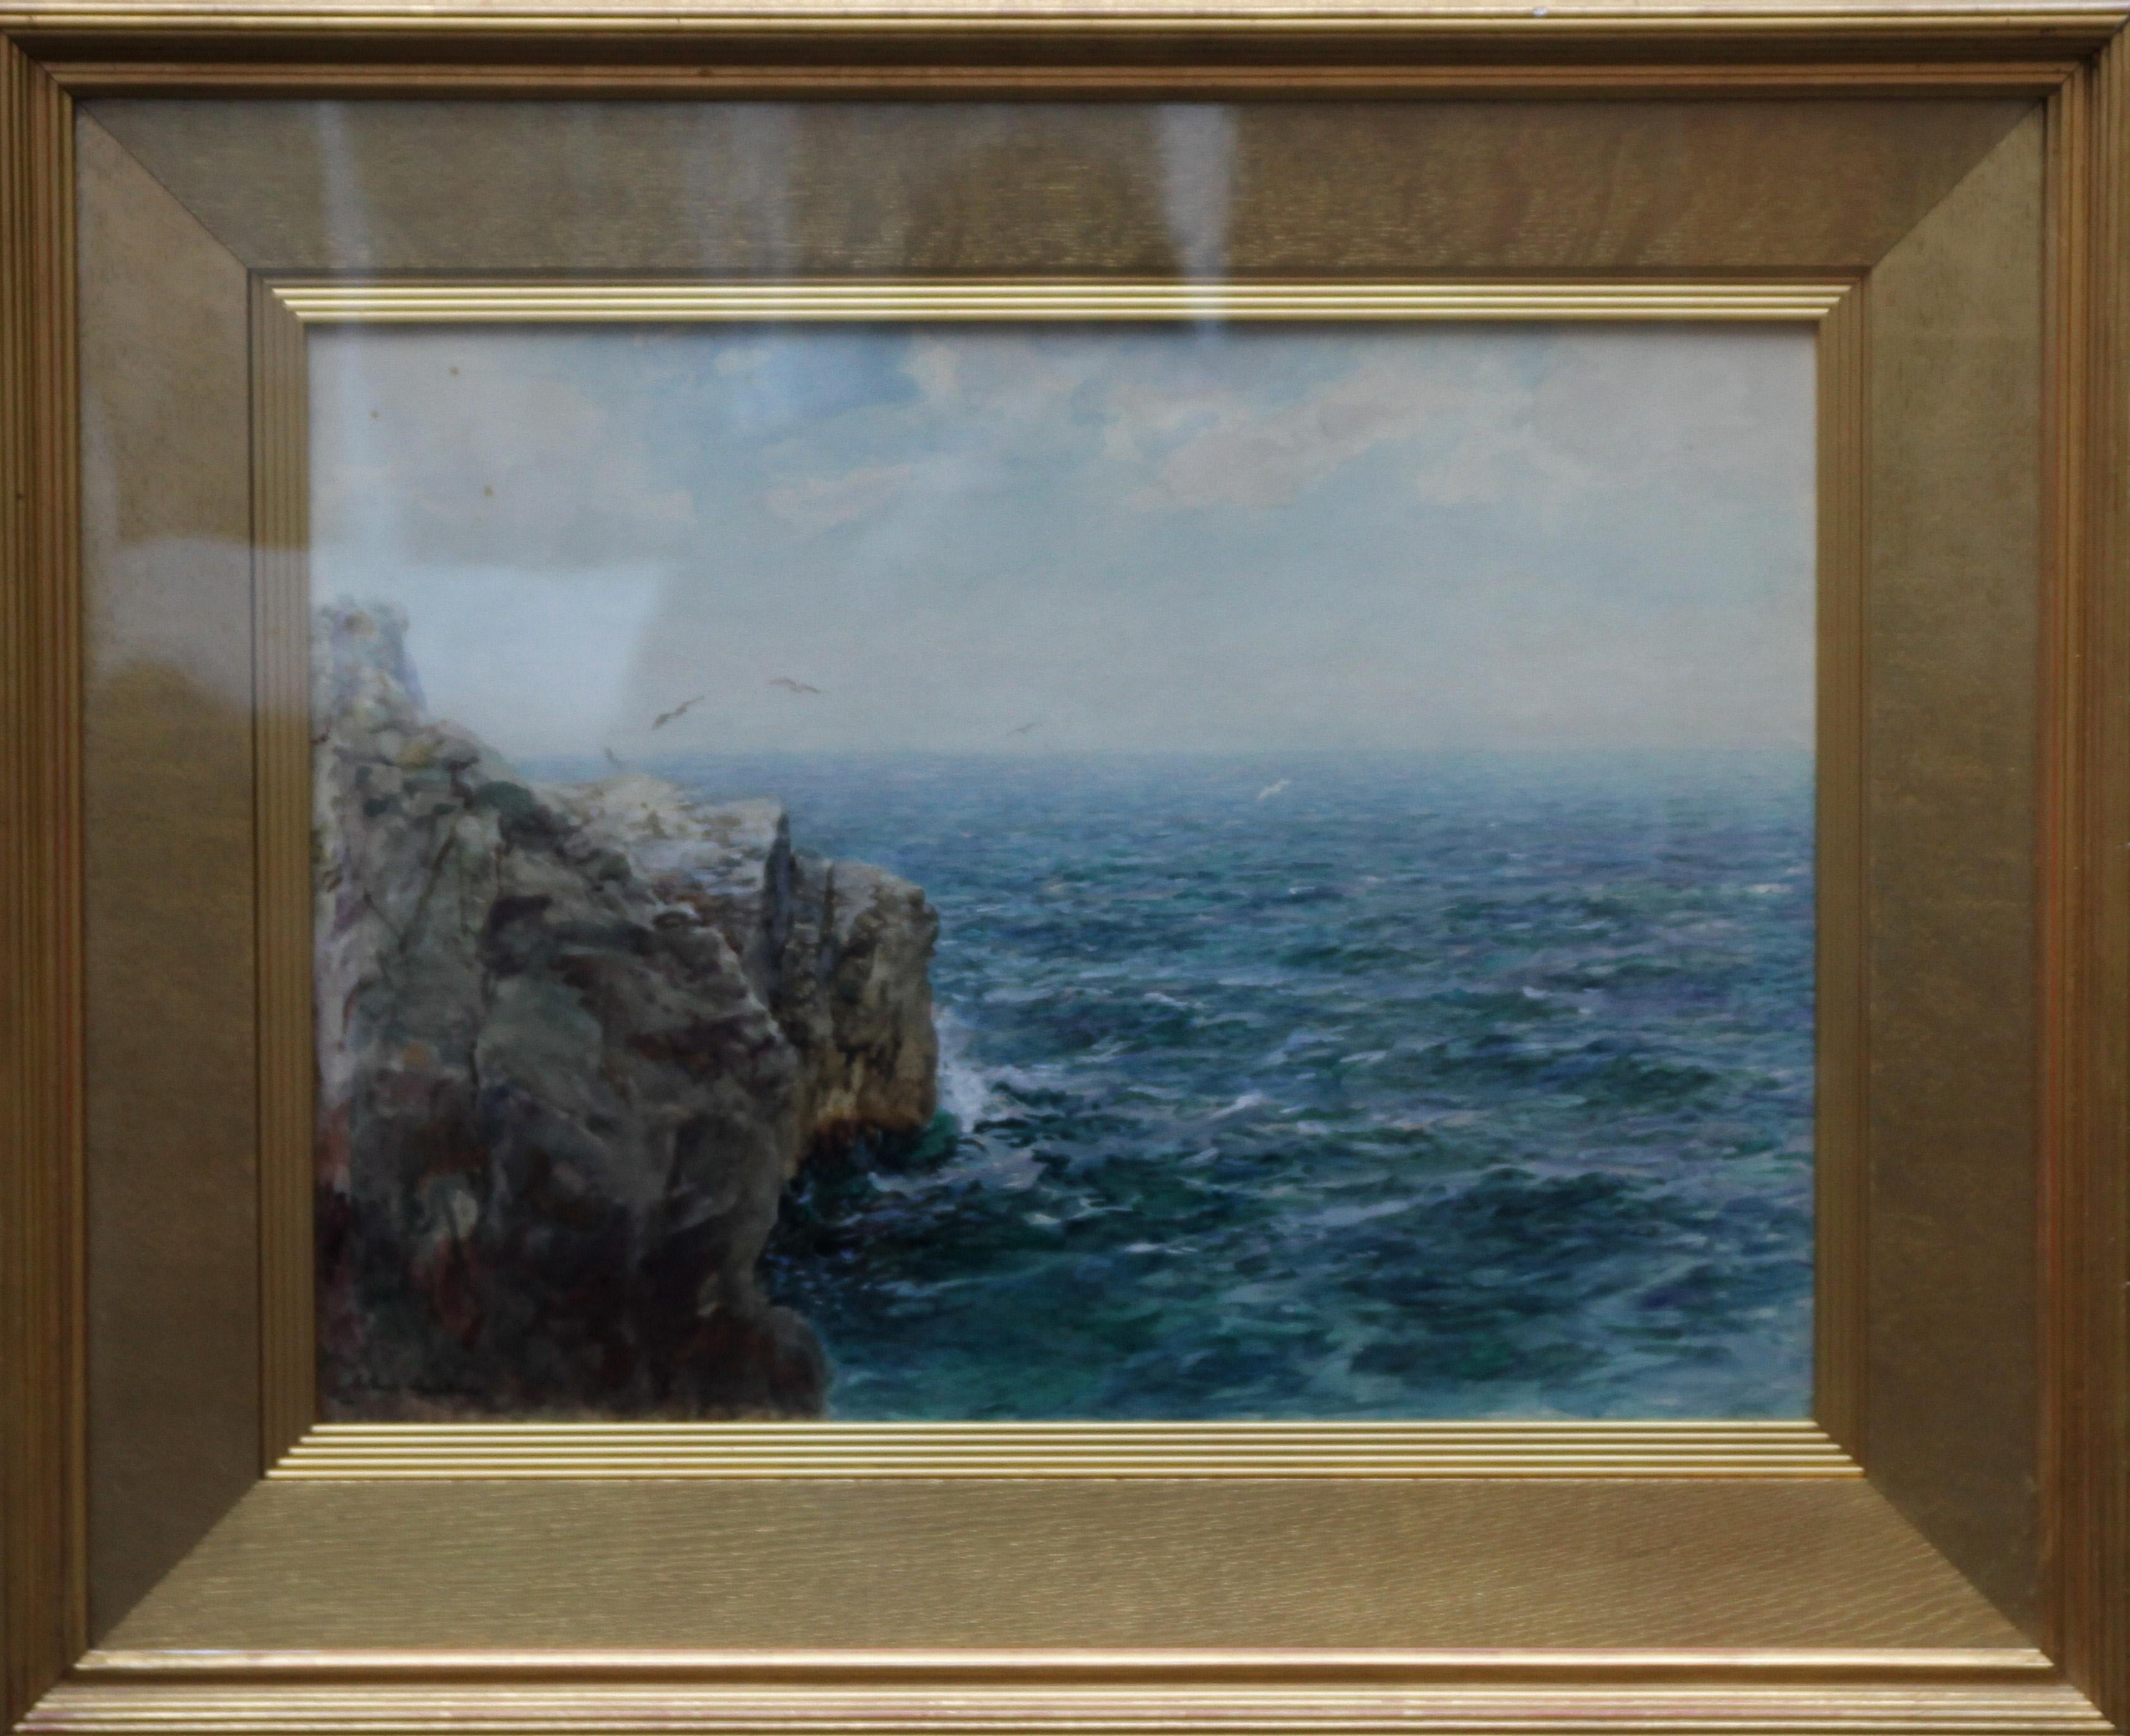 Atlantic Shores - British Victorian art Cornwall painting seascape seagulls  1